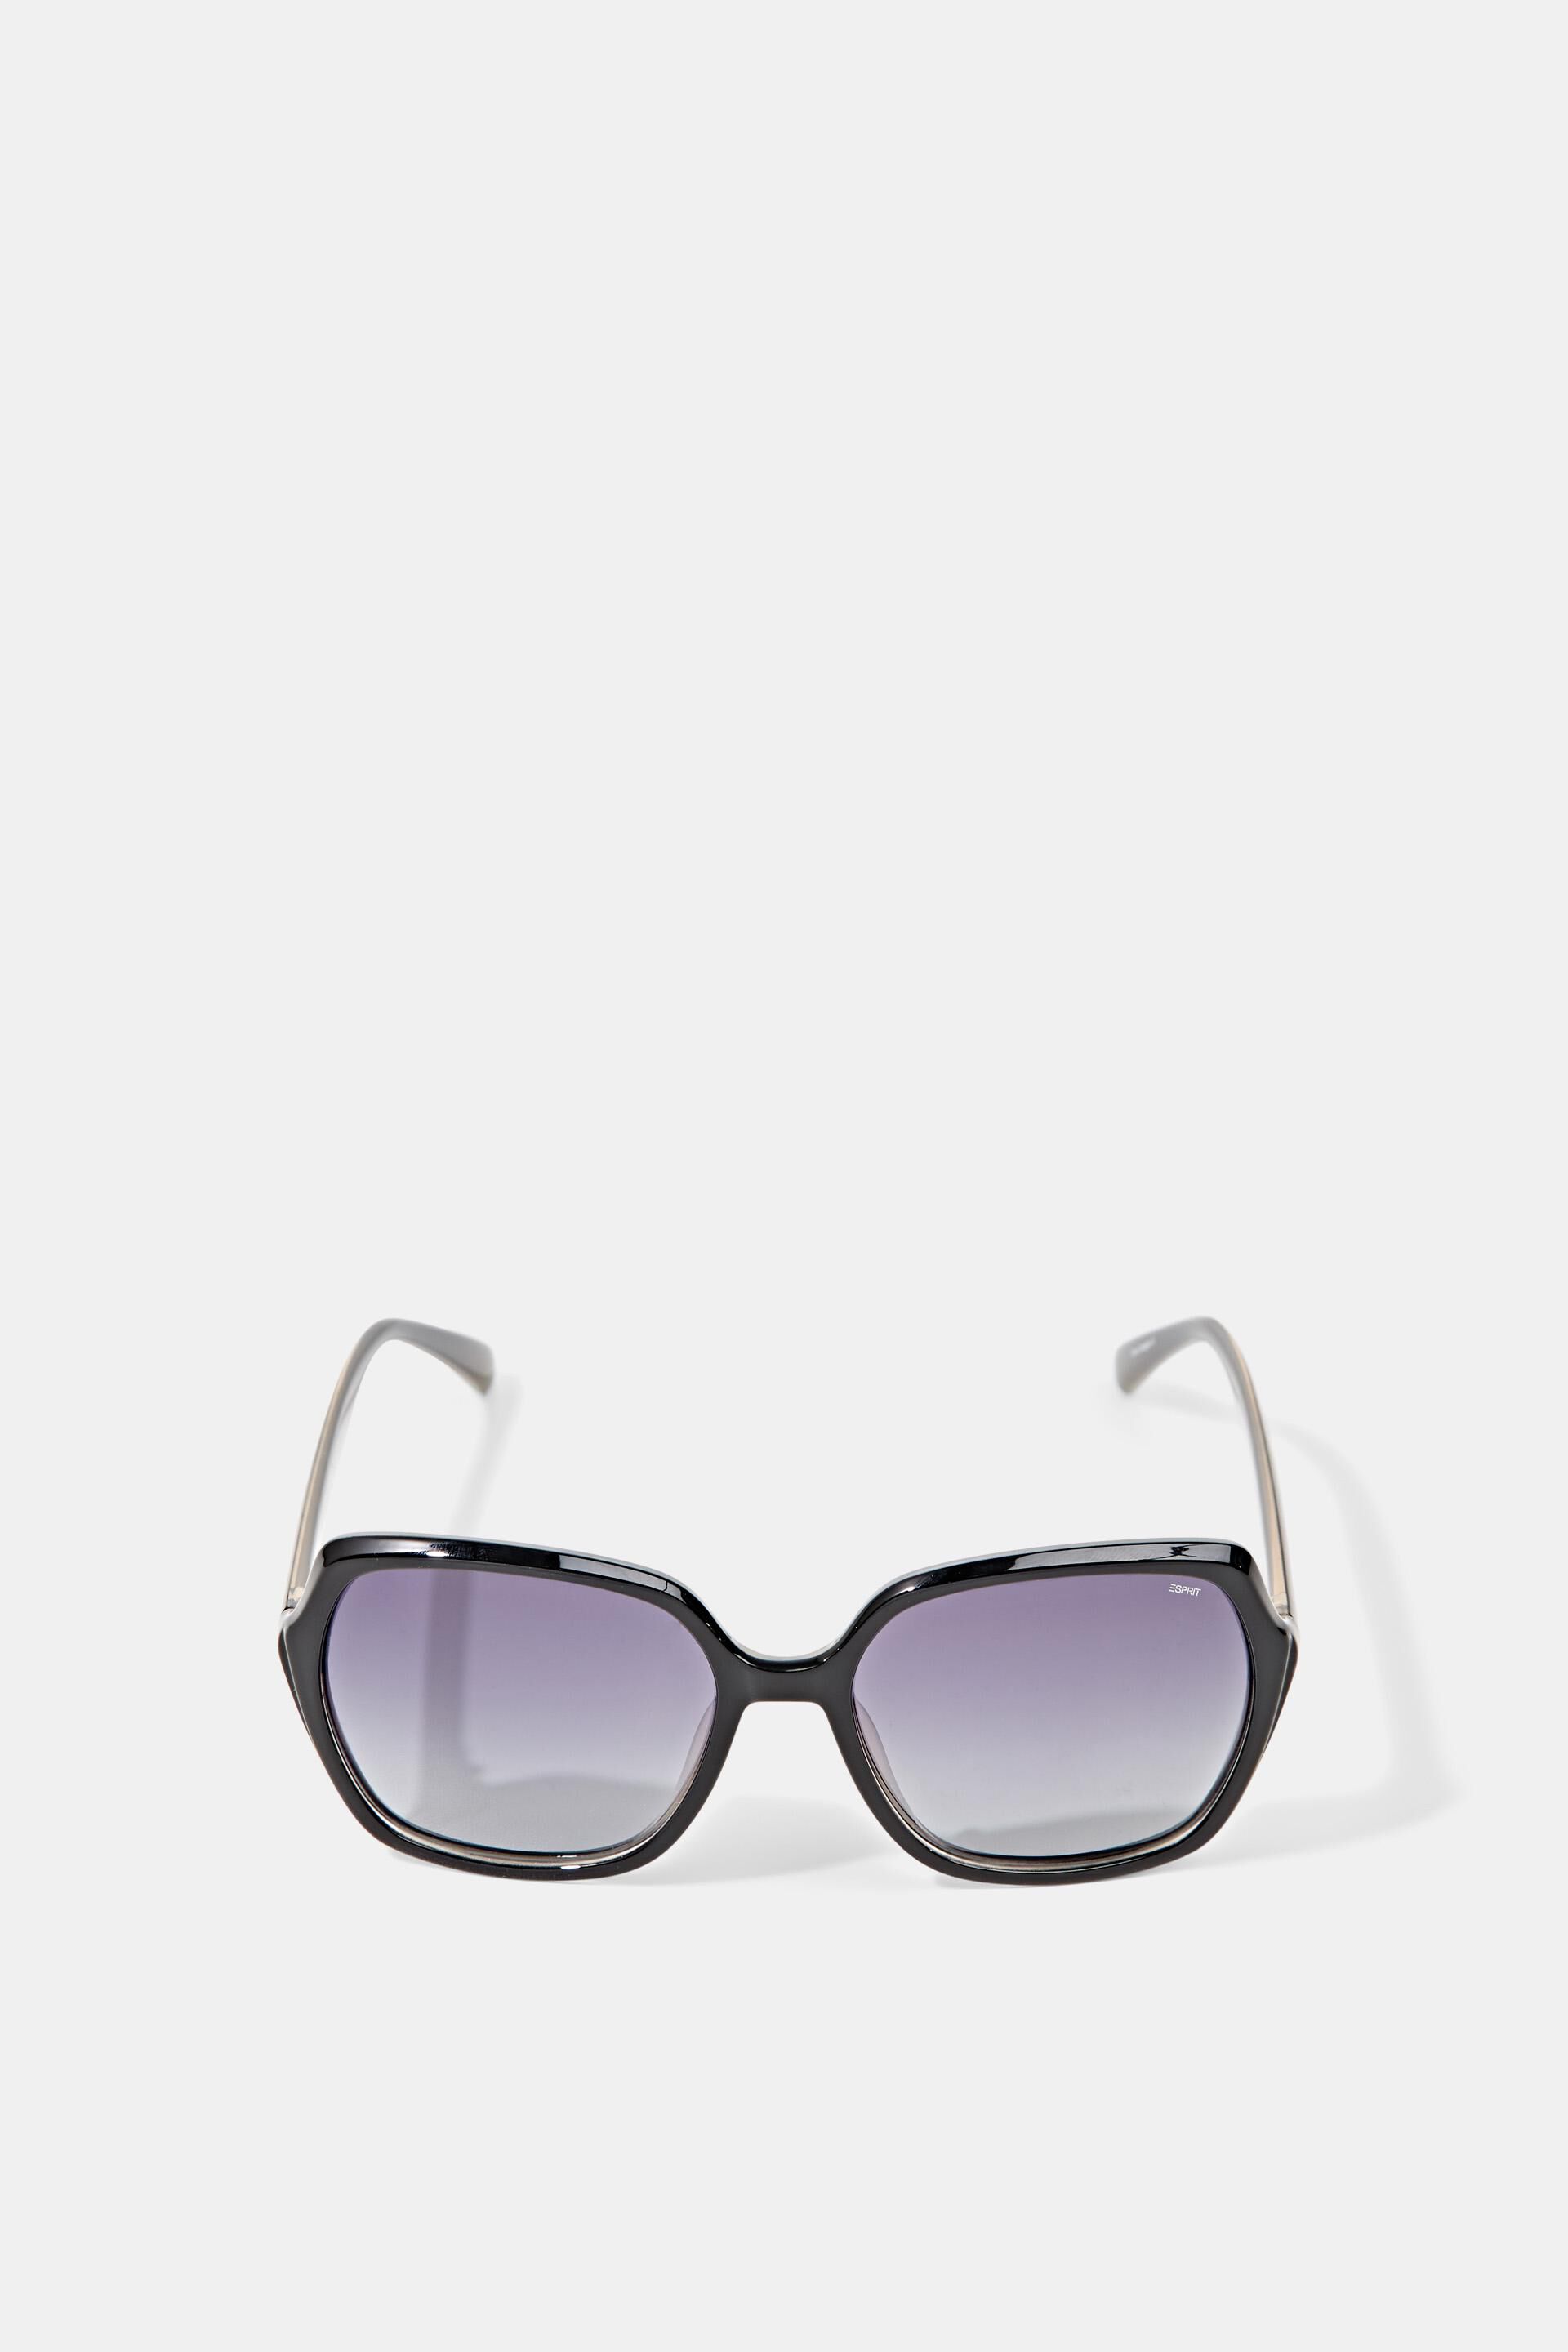 Esprit with large lenses sunglasses Statement